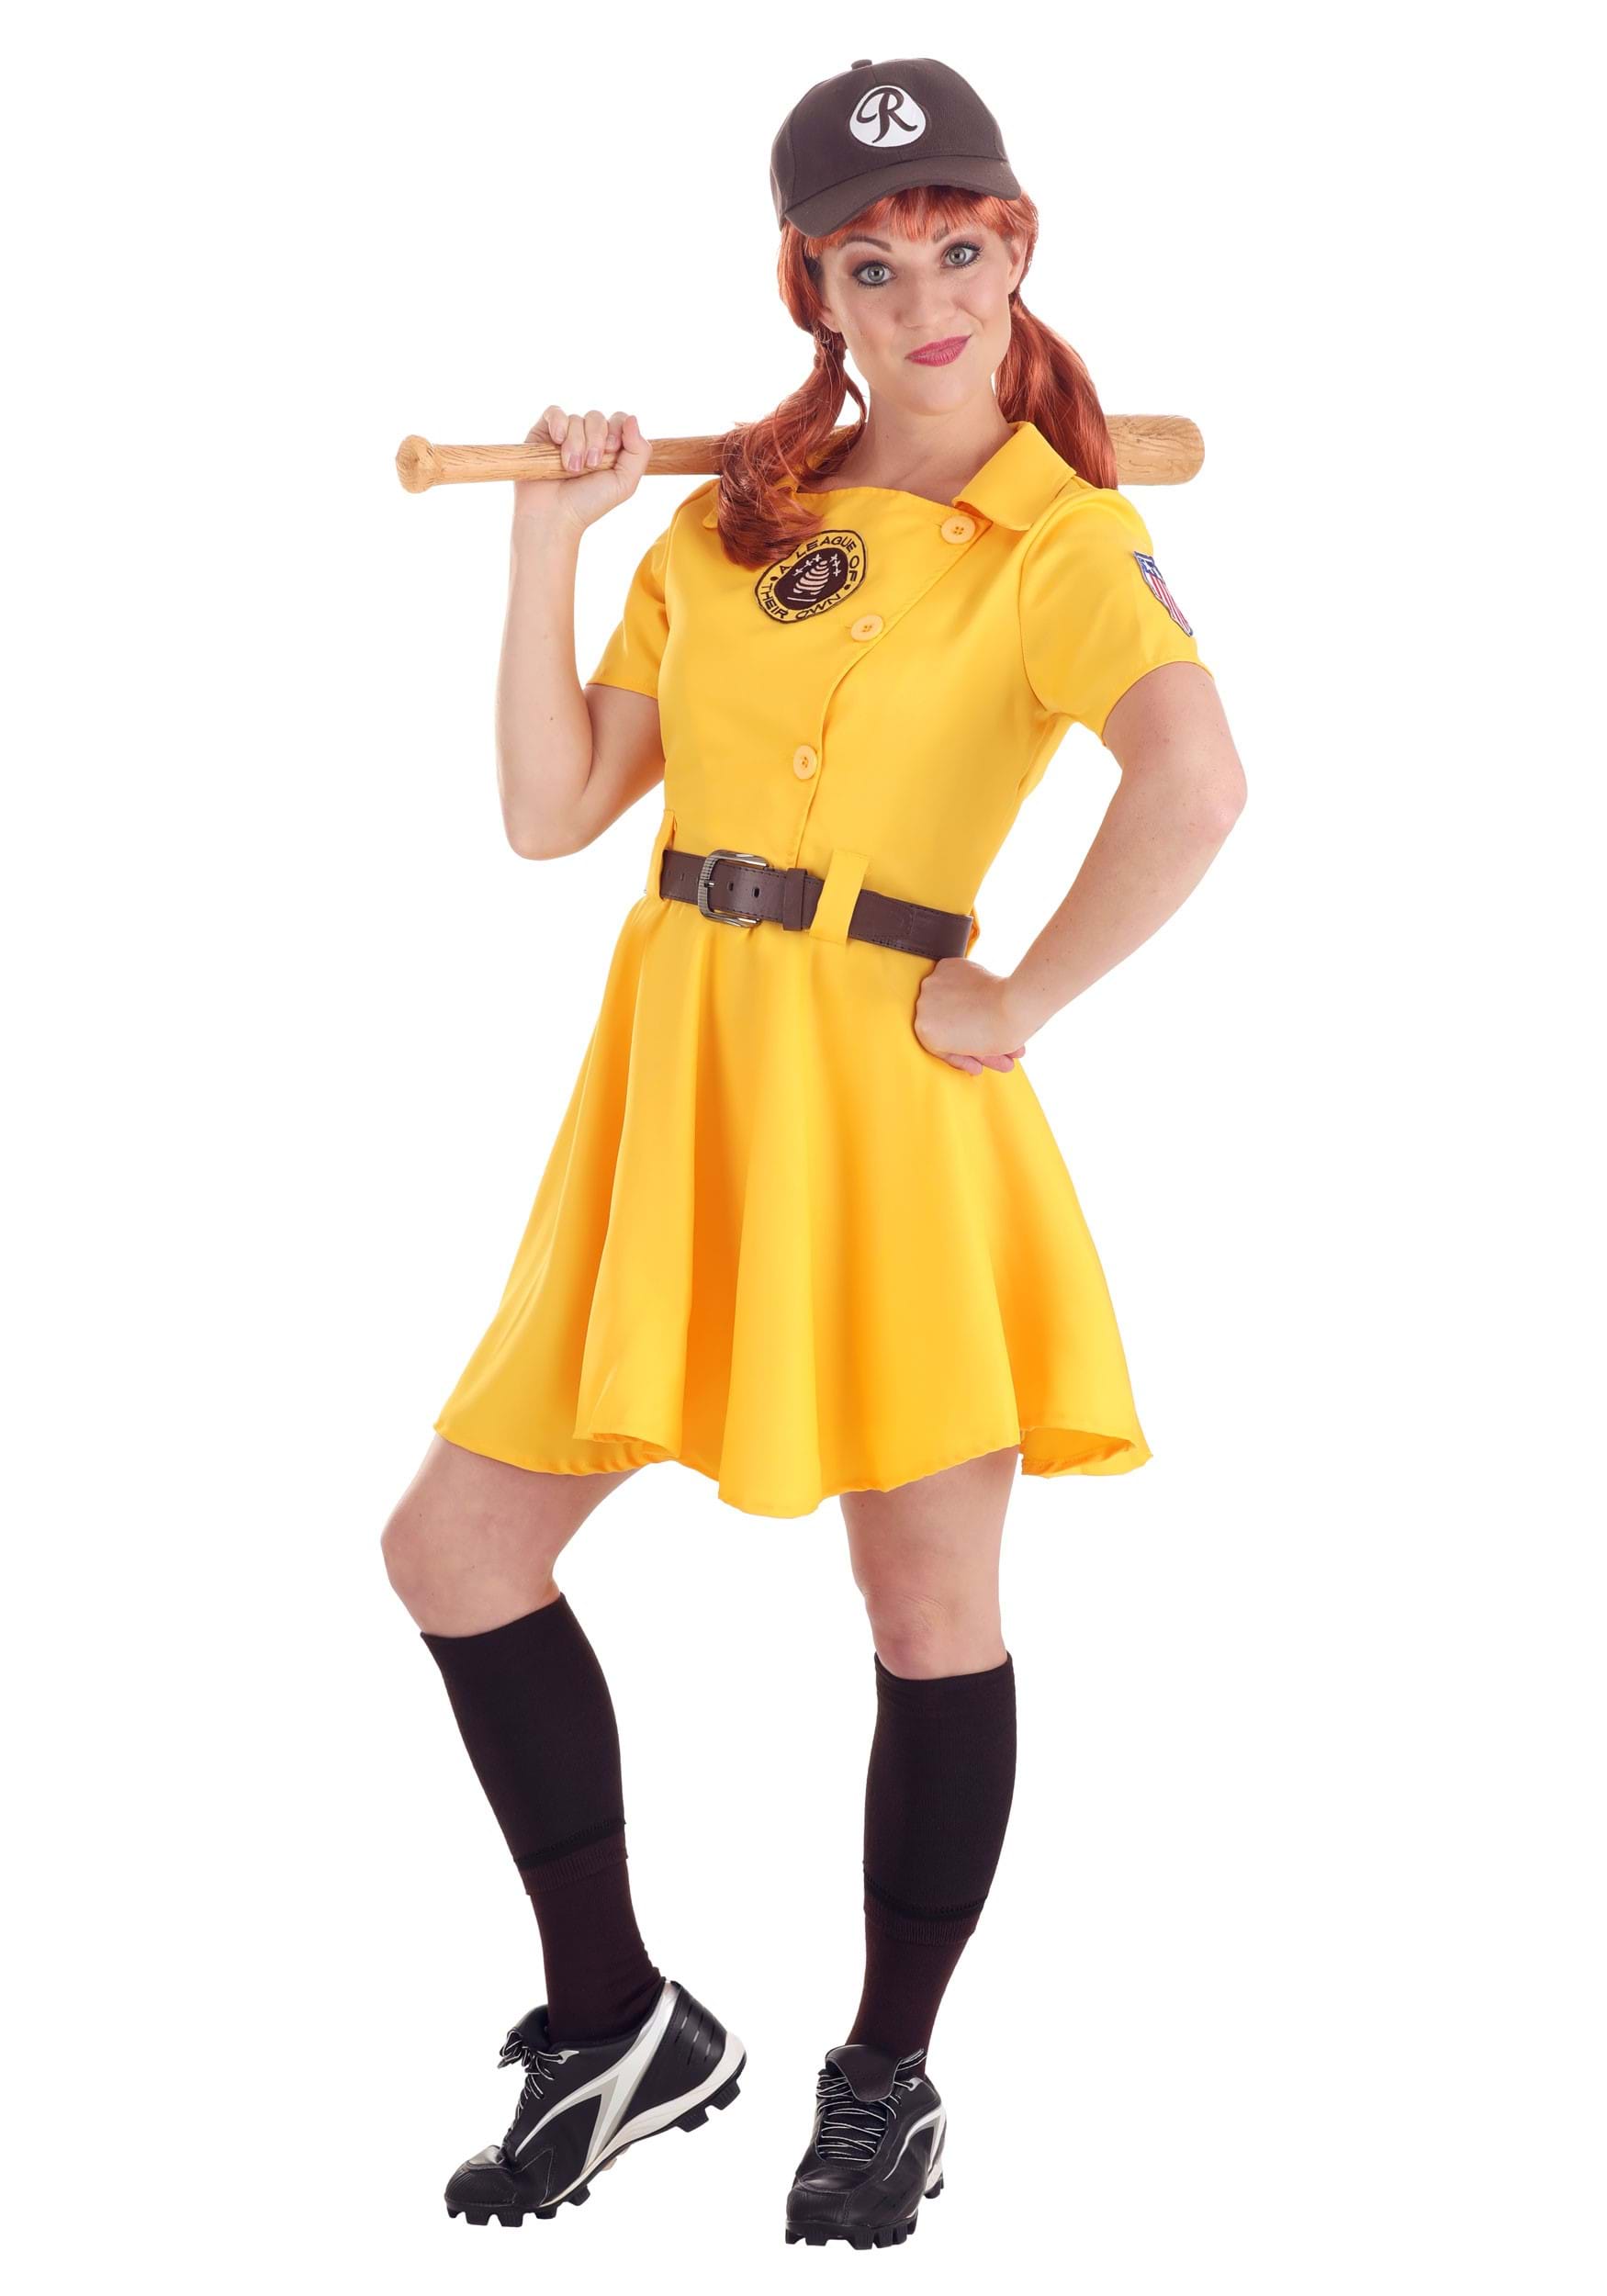 Rockford Peaches Women's Costume Baseball Uniform - Medium